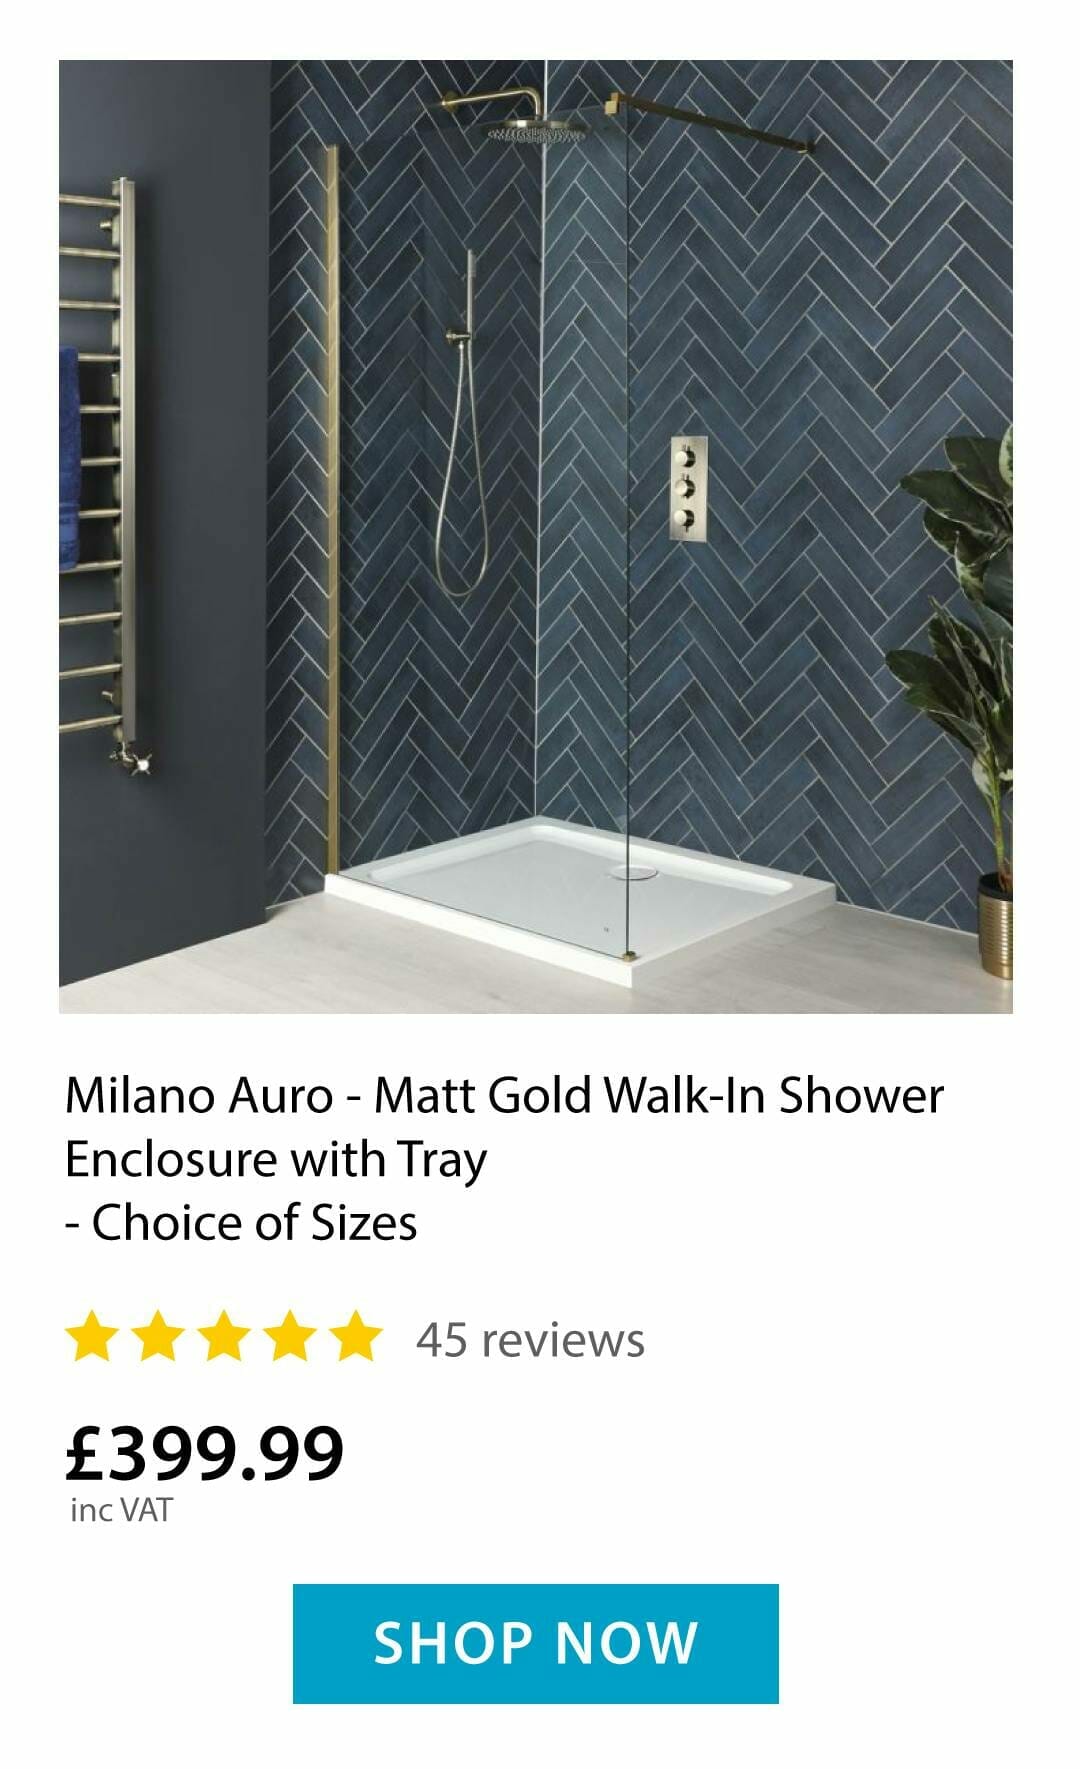 Auro gold shower screen